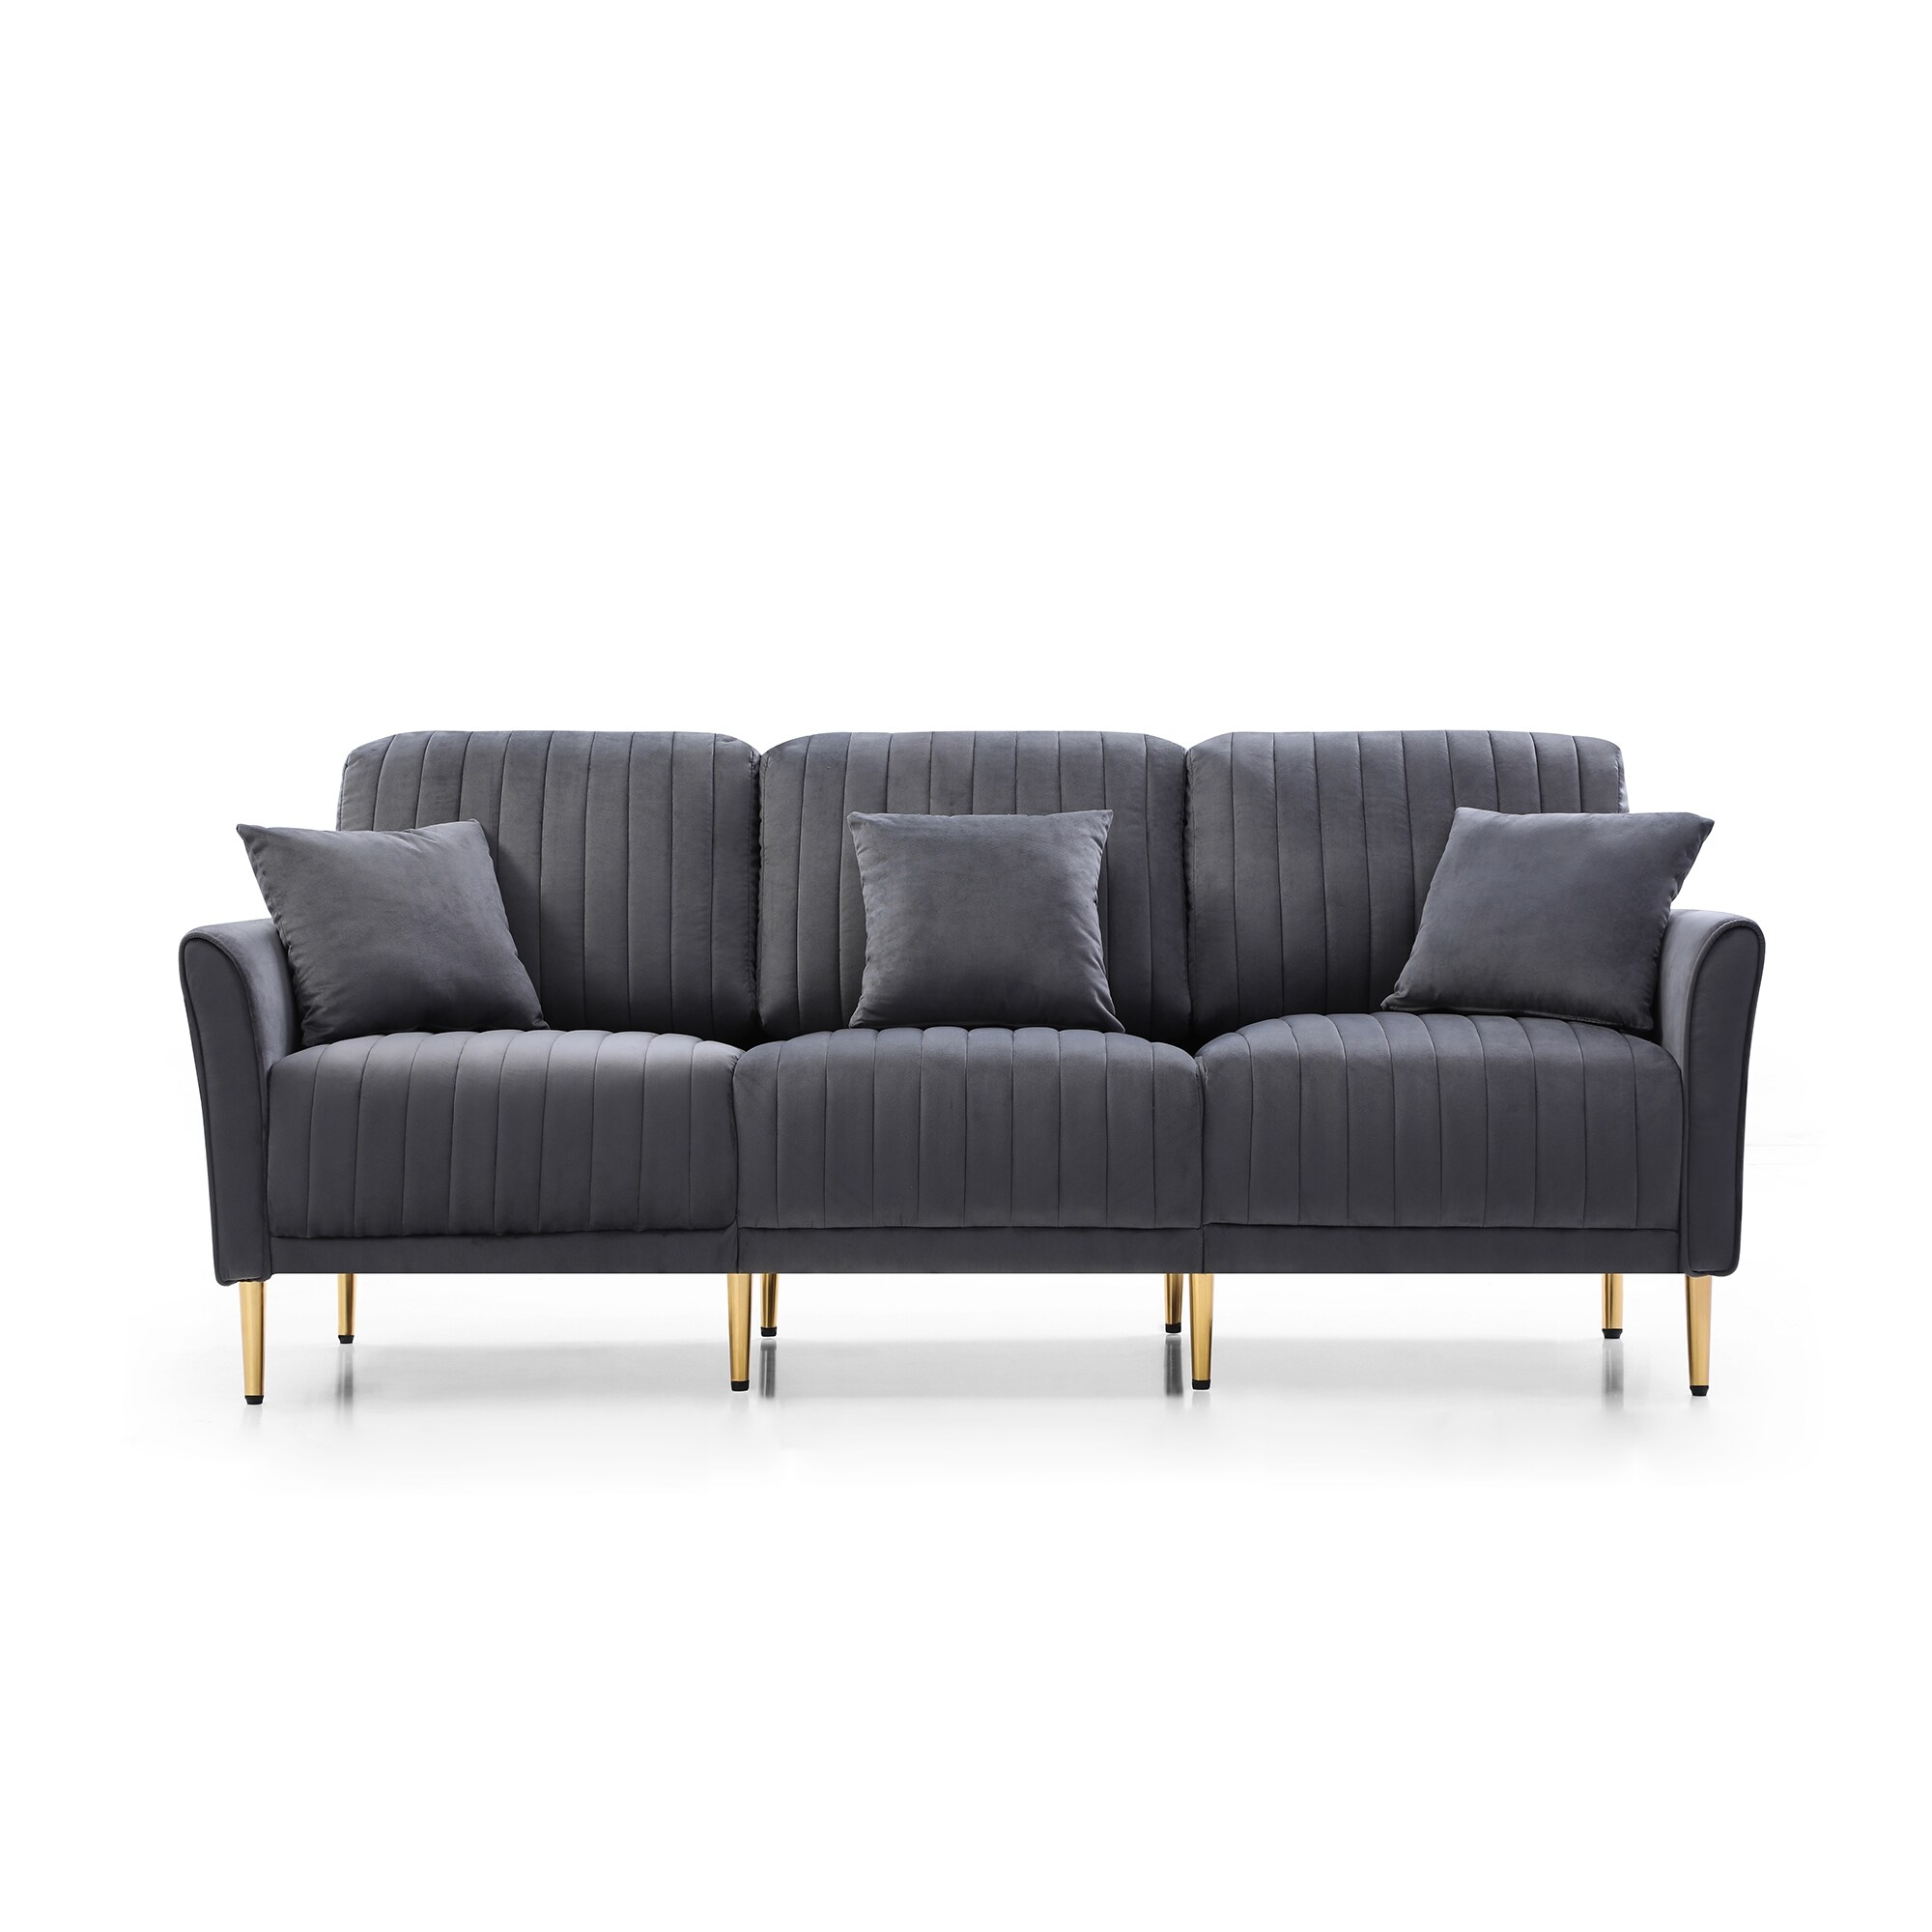 Modern Streamline 3-Seat Sofa with Lumbar Support - Bed Bath & Beyond -  38372101